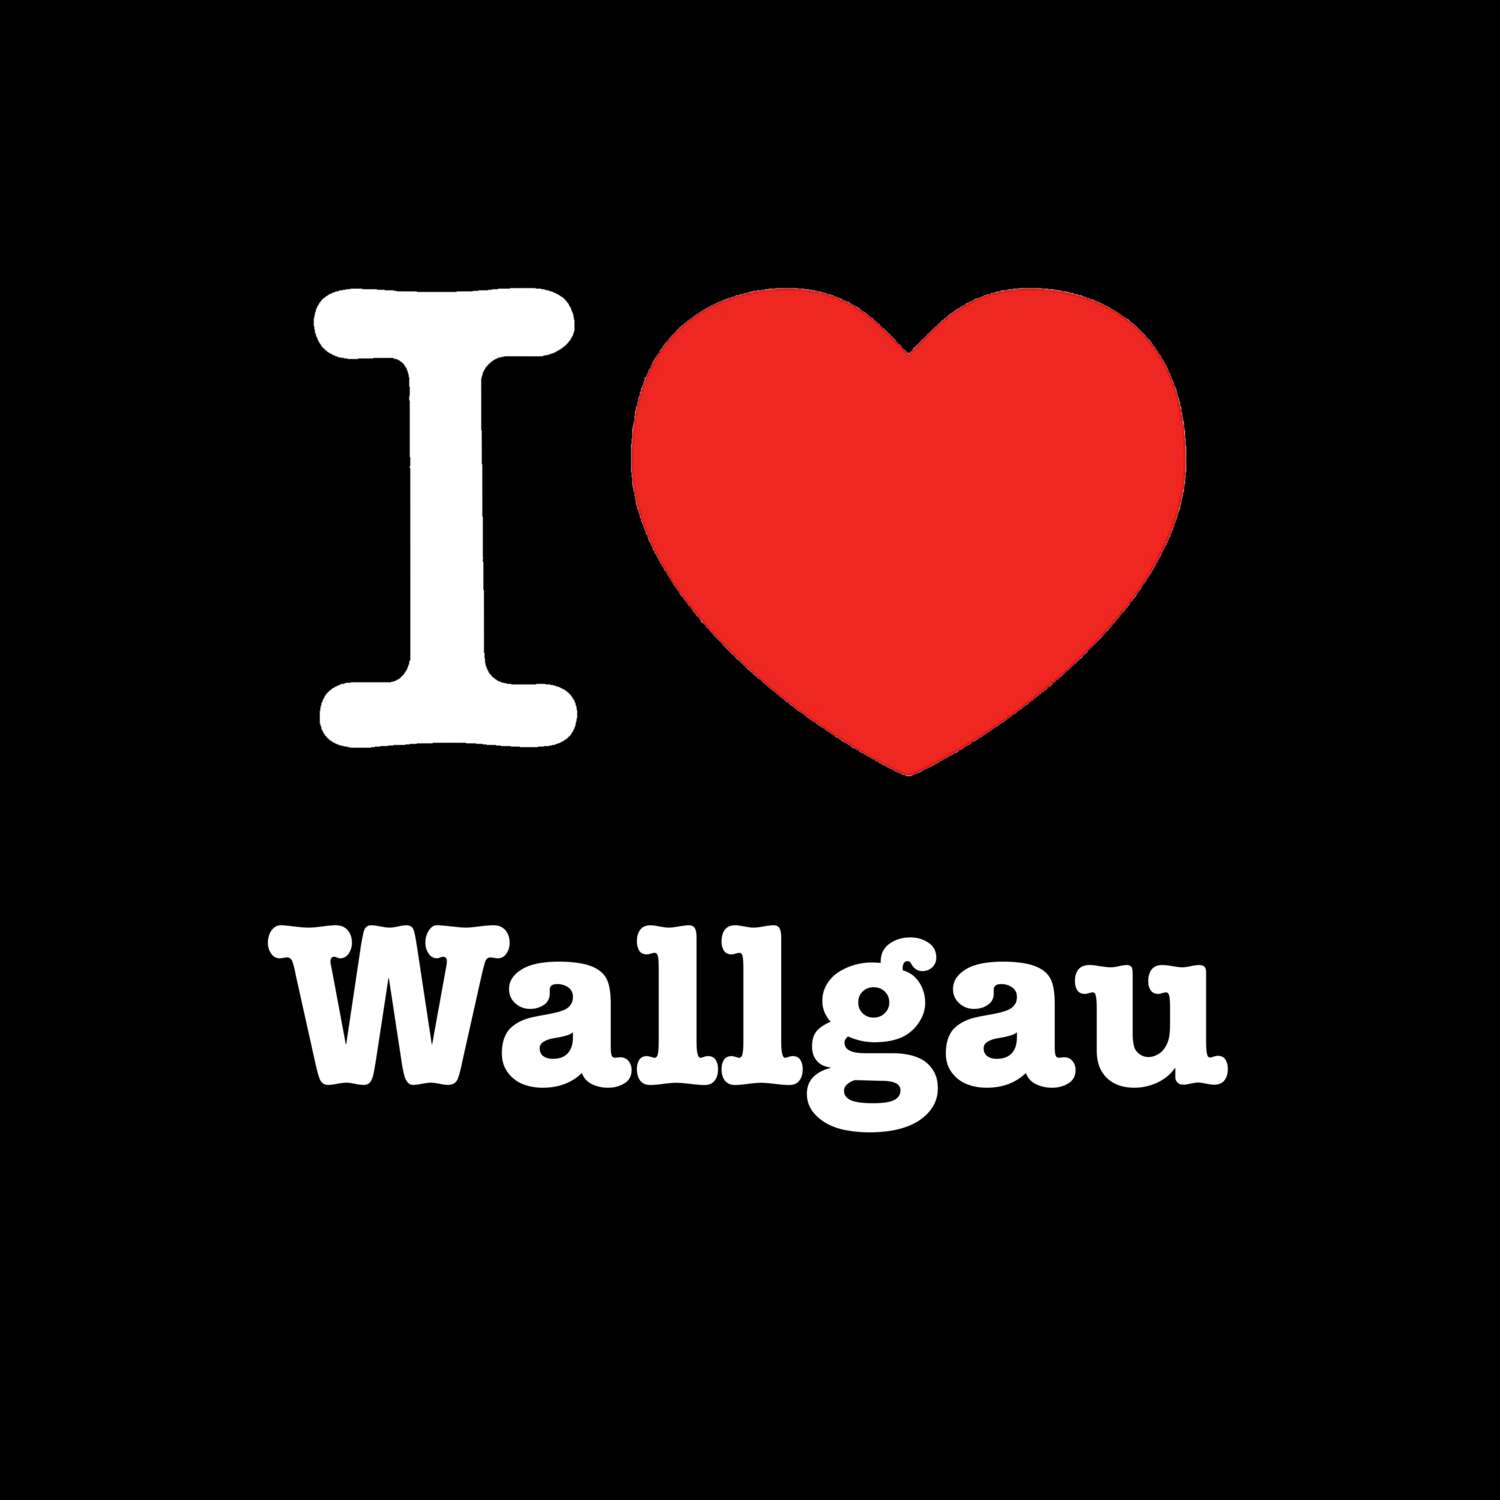 Wallgau T-Shirt »I love«